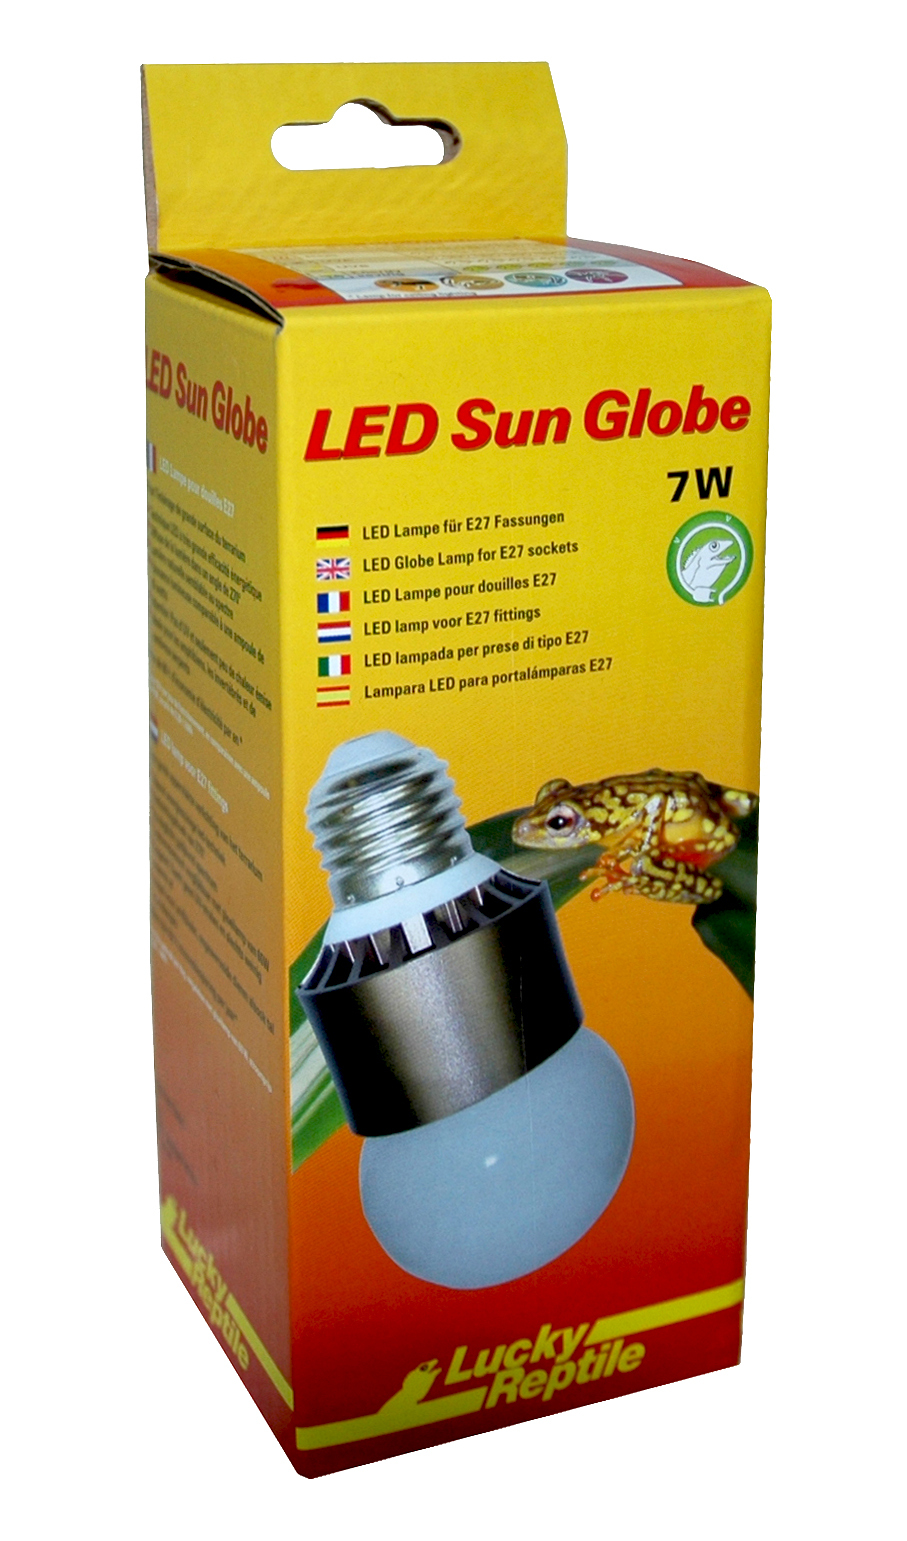 Import-Export Peter Hoch GmbH LED Sun Globe 7W